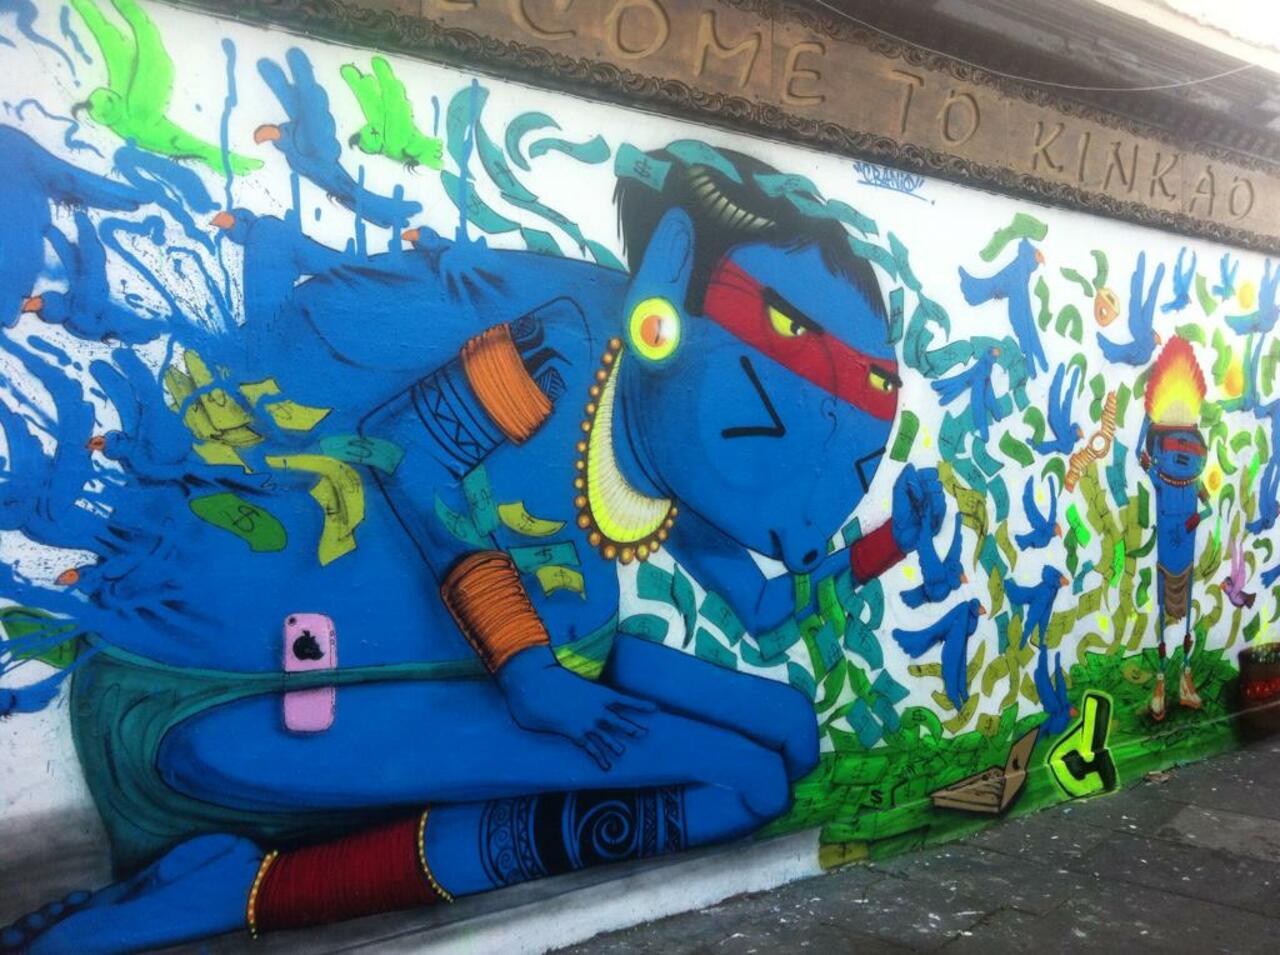 New work by @cranioartes on Pedley Street #art #streetart #graffiti @GoogleStreetArt @streetartgall http://t.co/enWO72YVYB